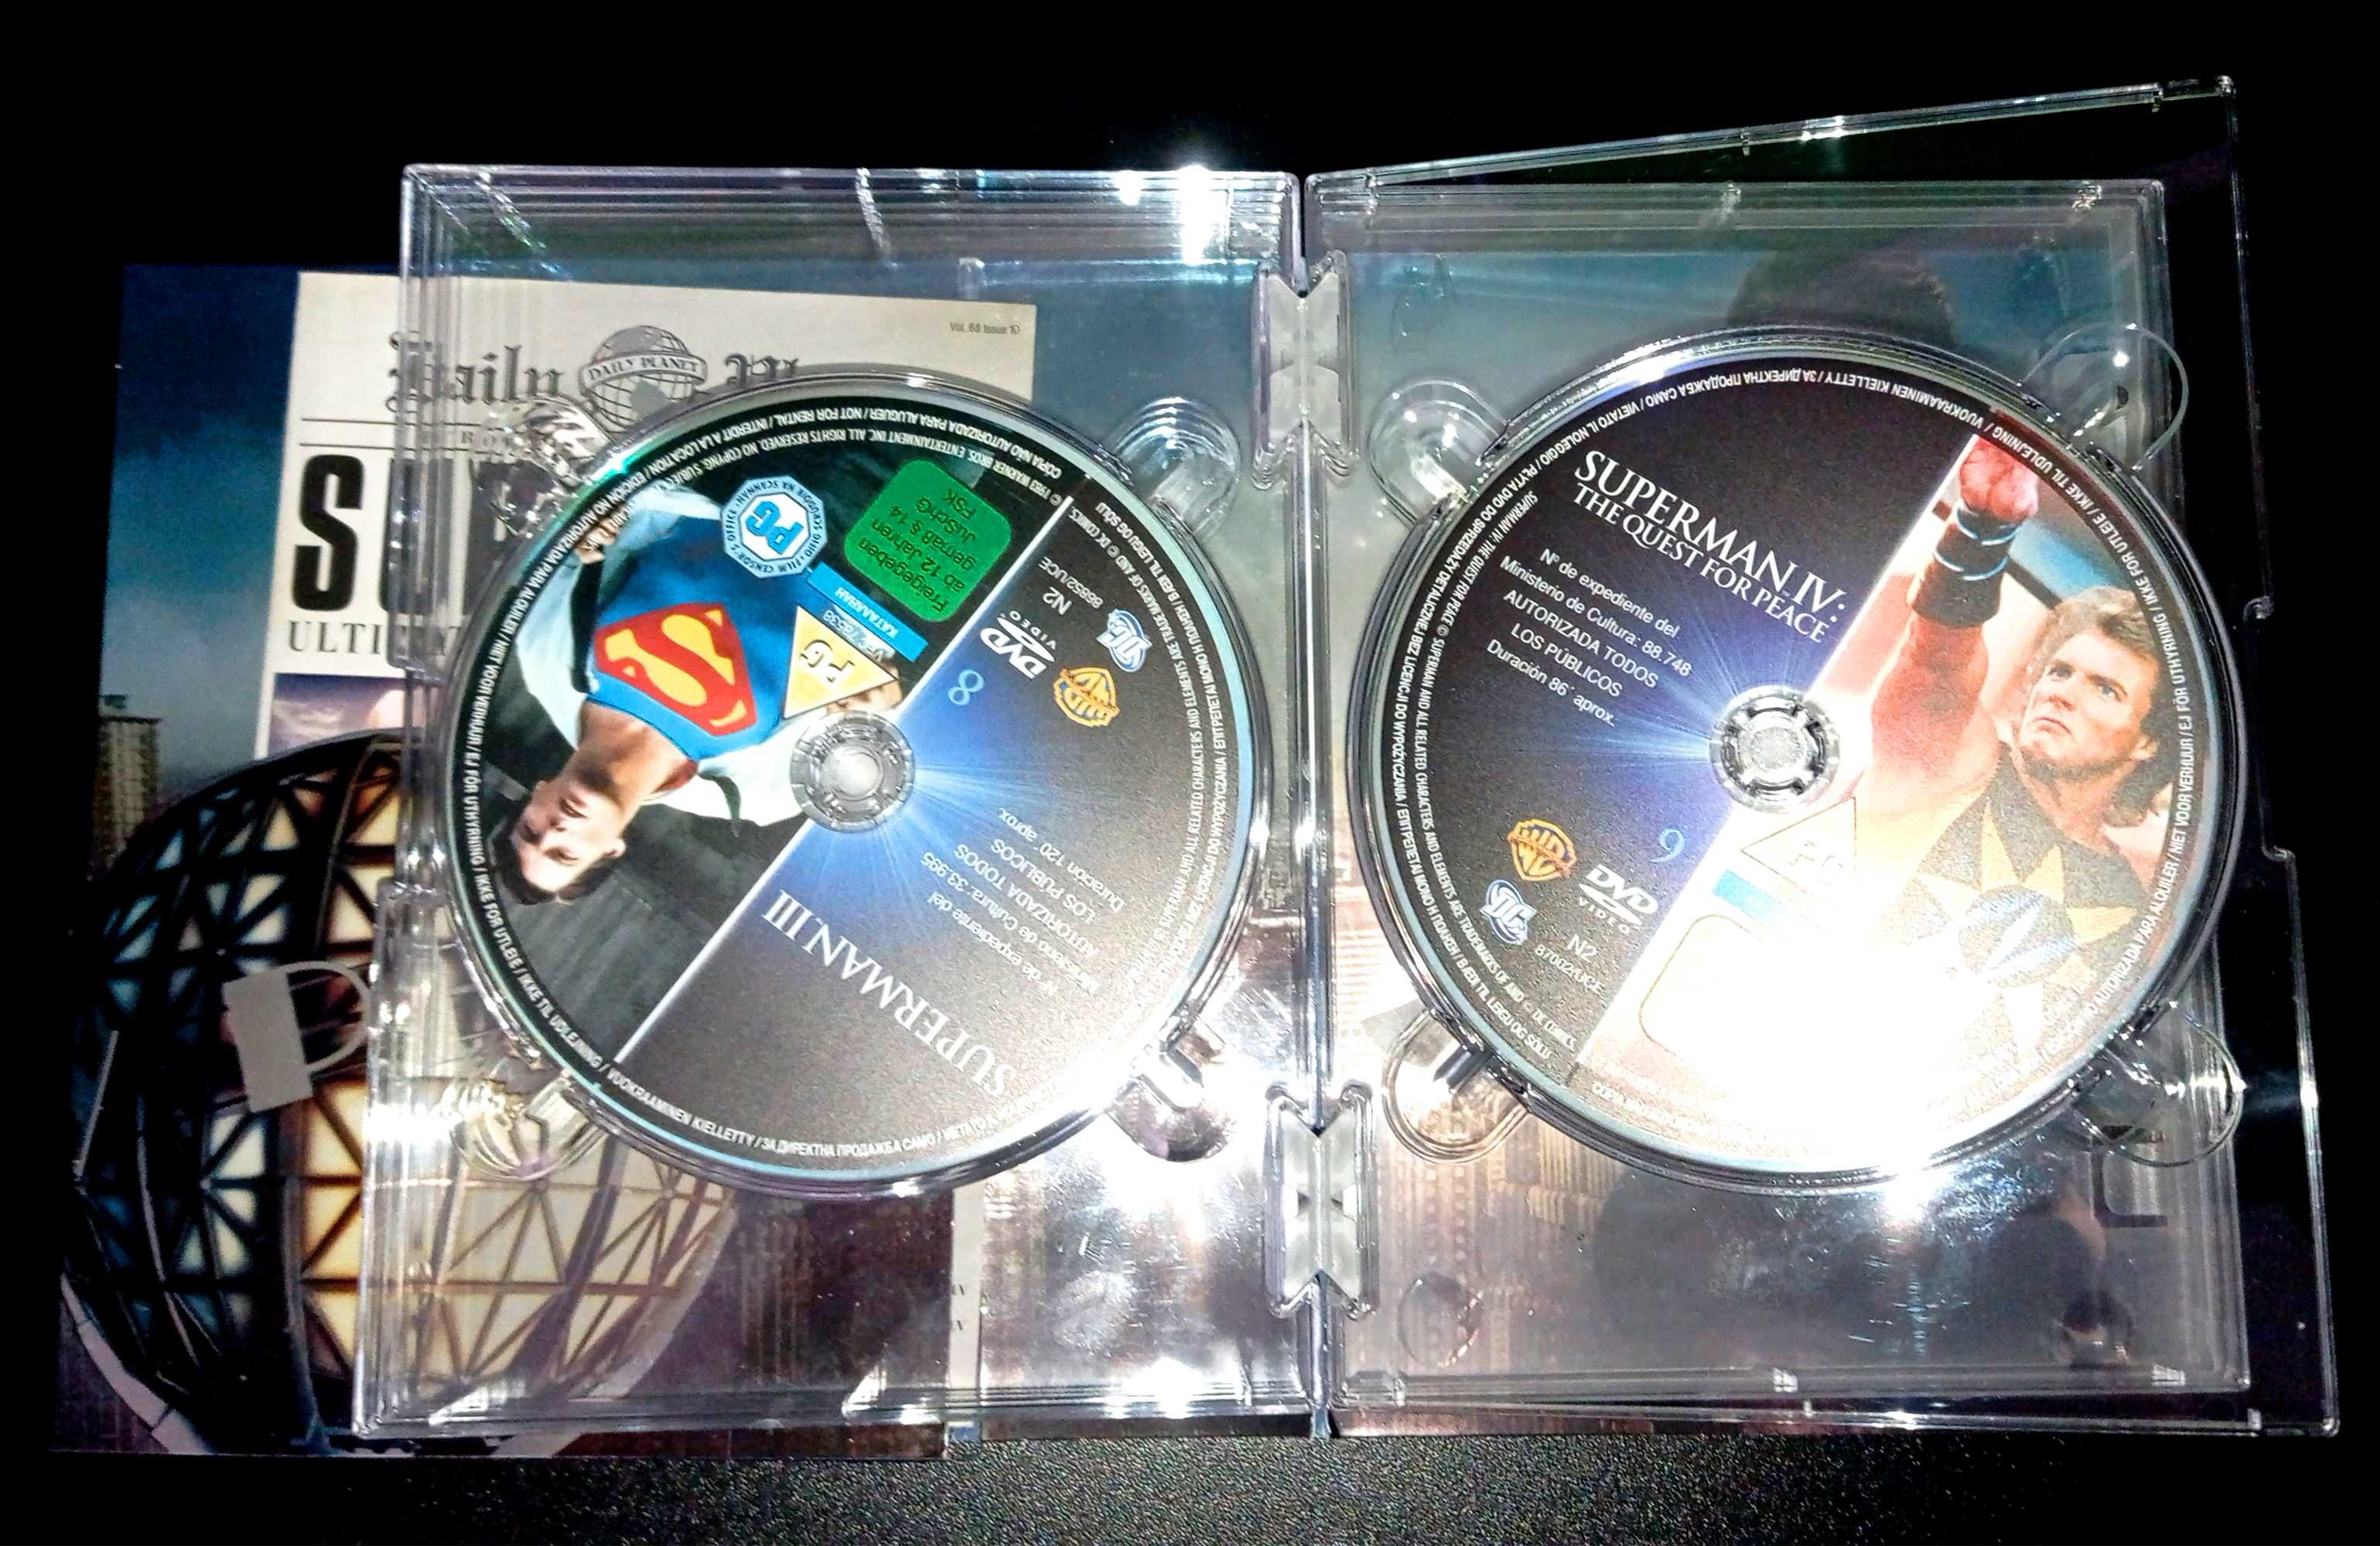 Superman Ultimate Collector's Edition DVD Boxset